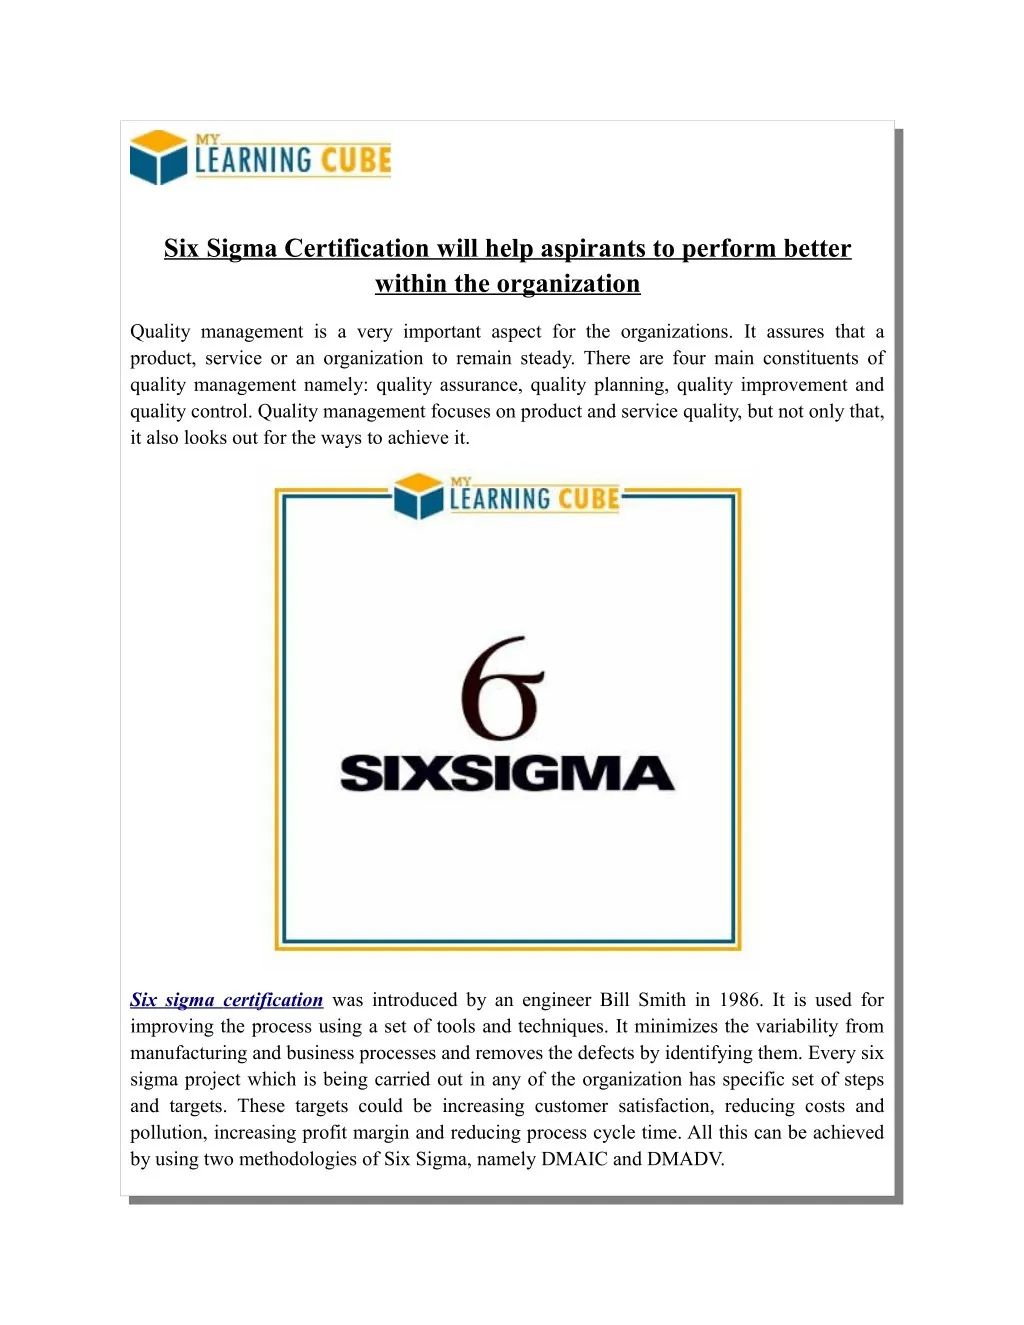 six sigma certification will help aspirants